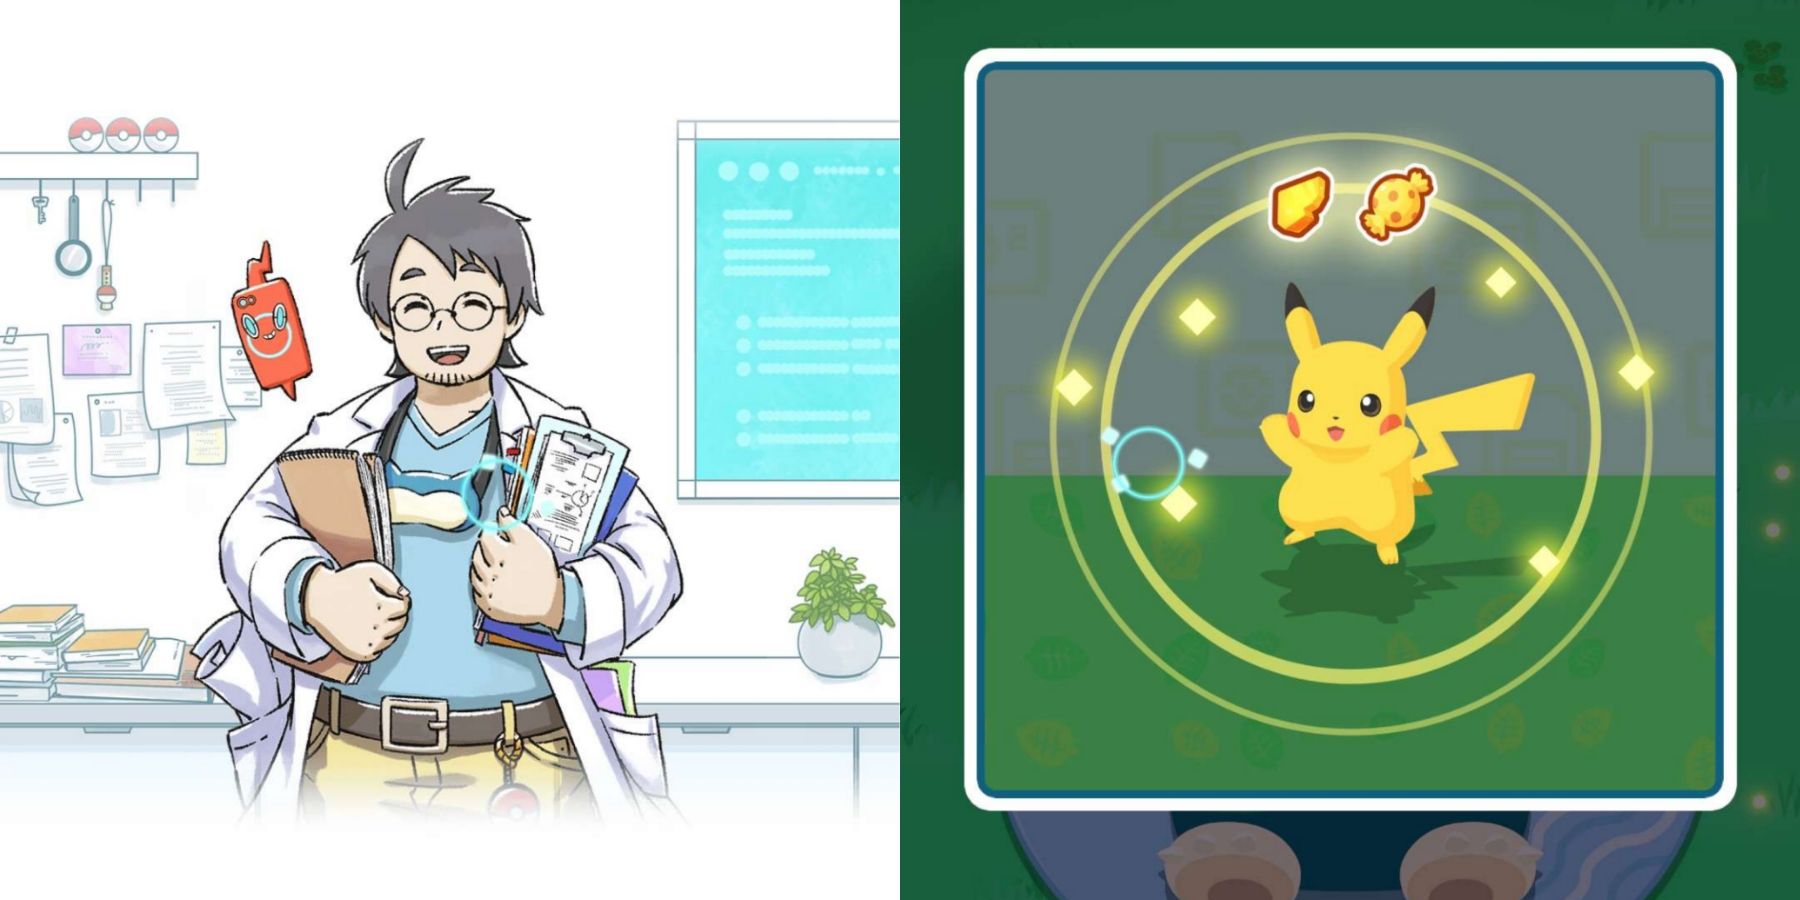 professor neroli and pikachu